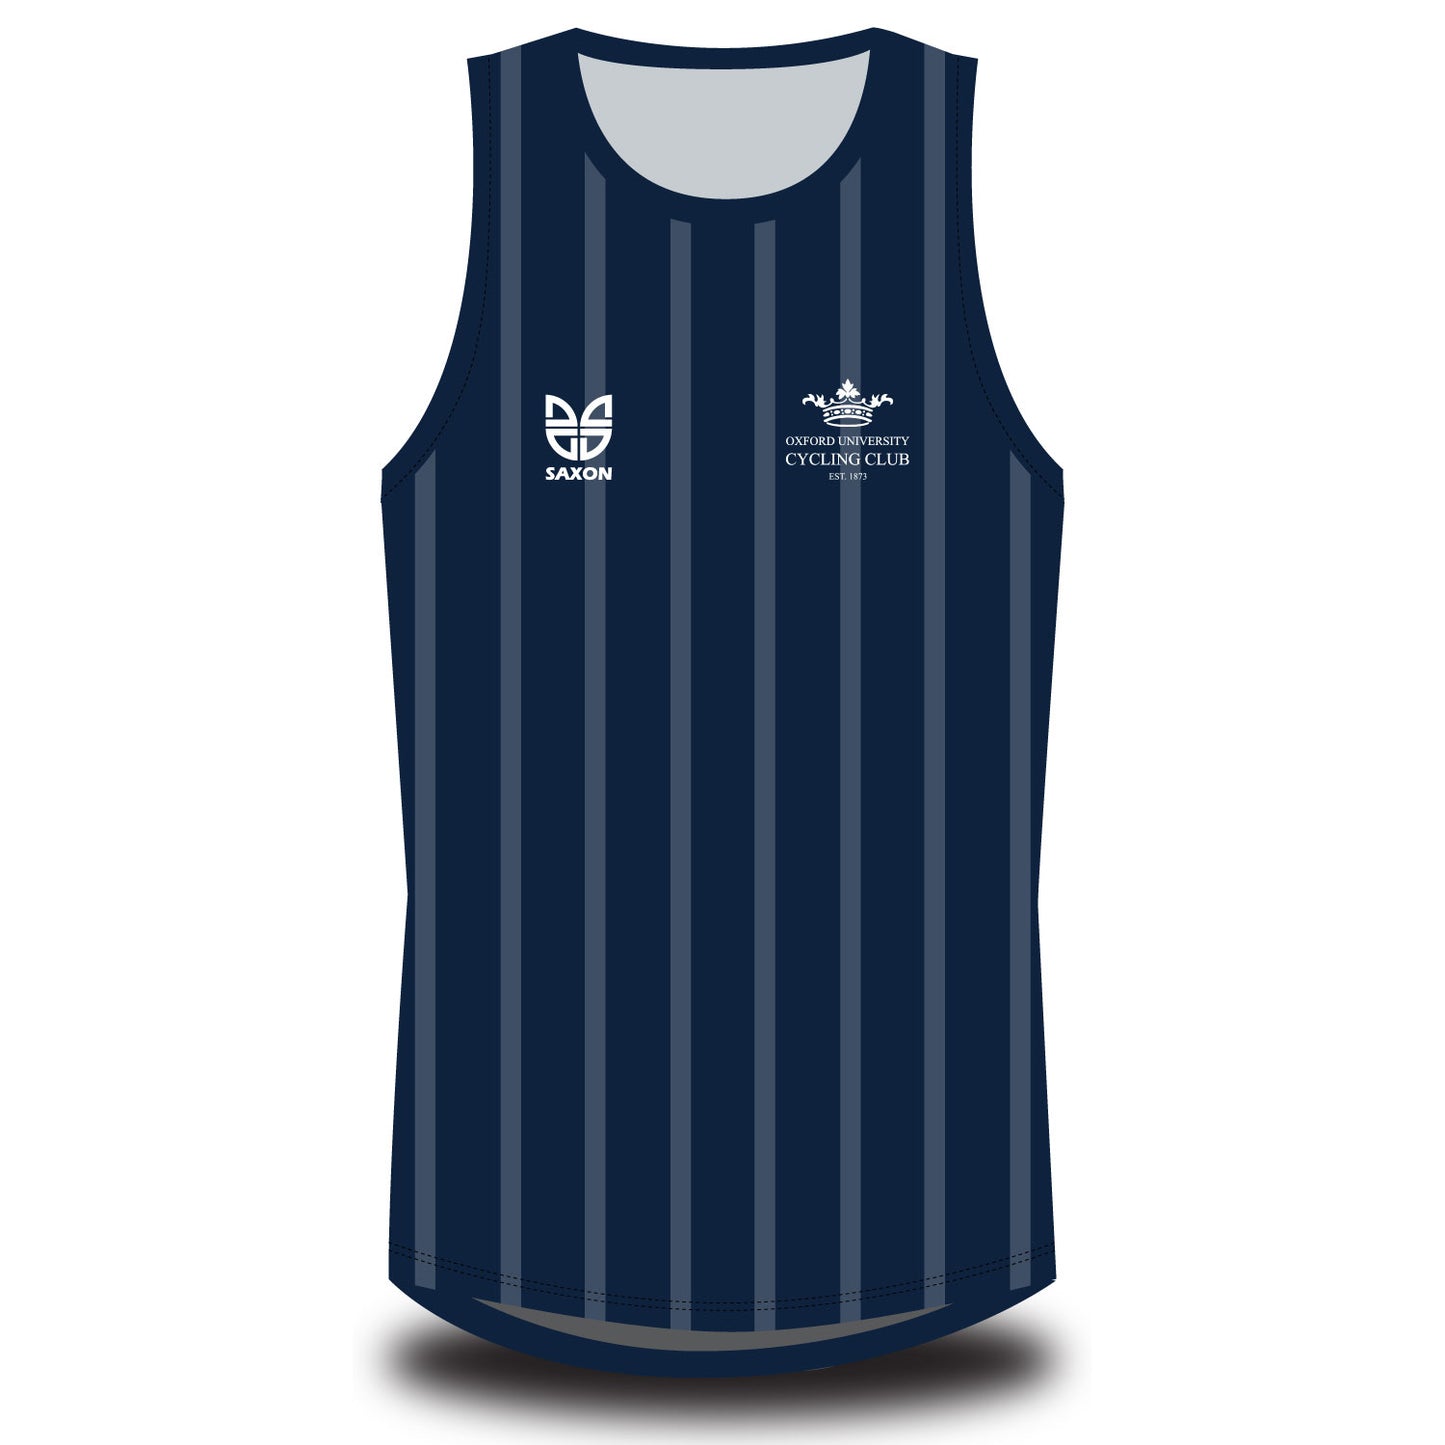 Oxford University Cycling Club Pinstripe Vest